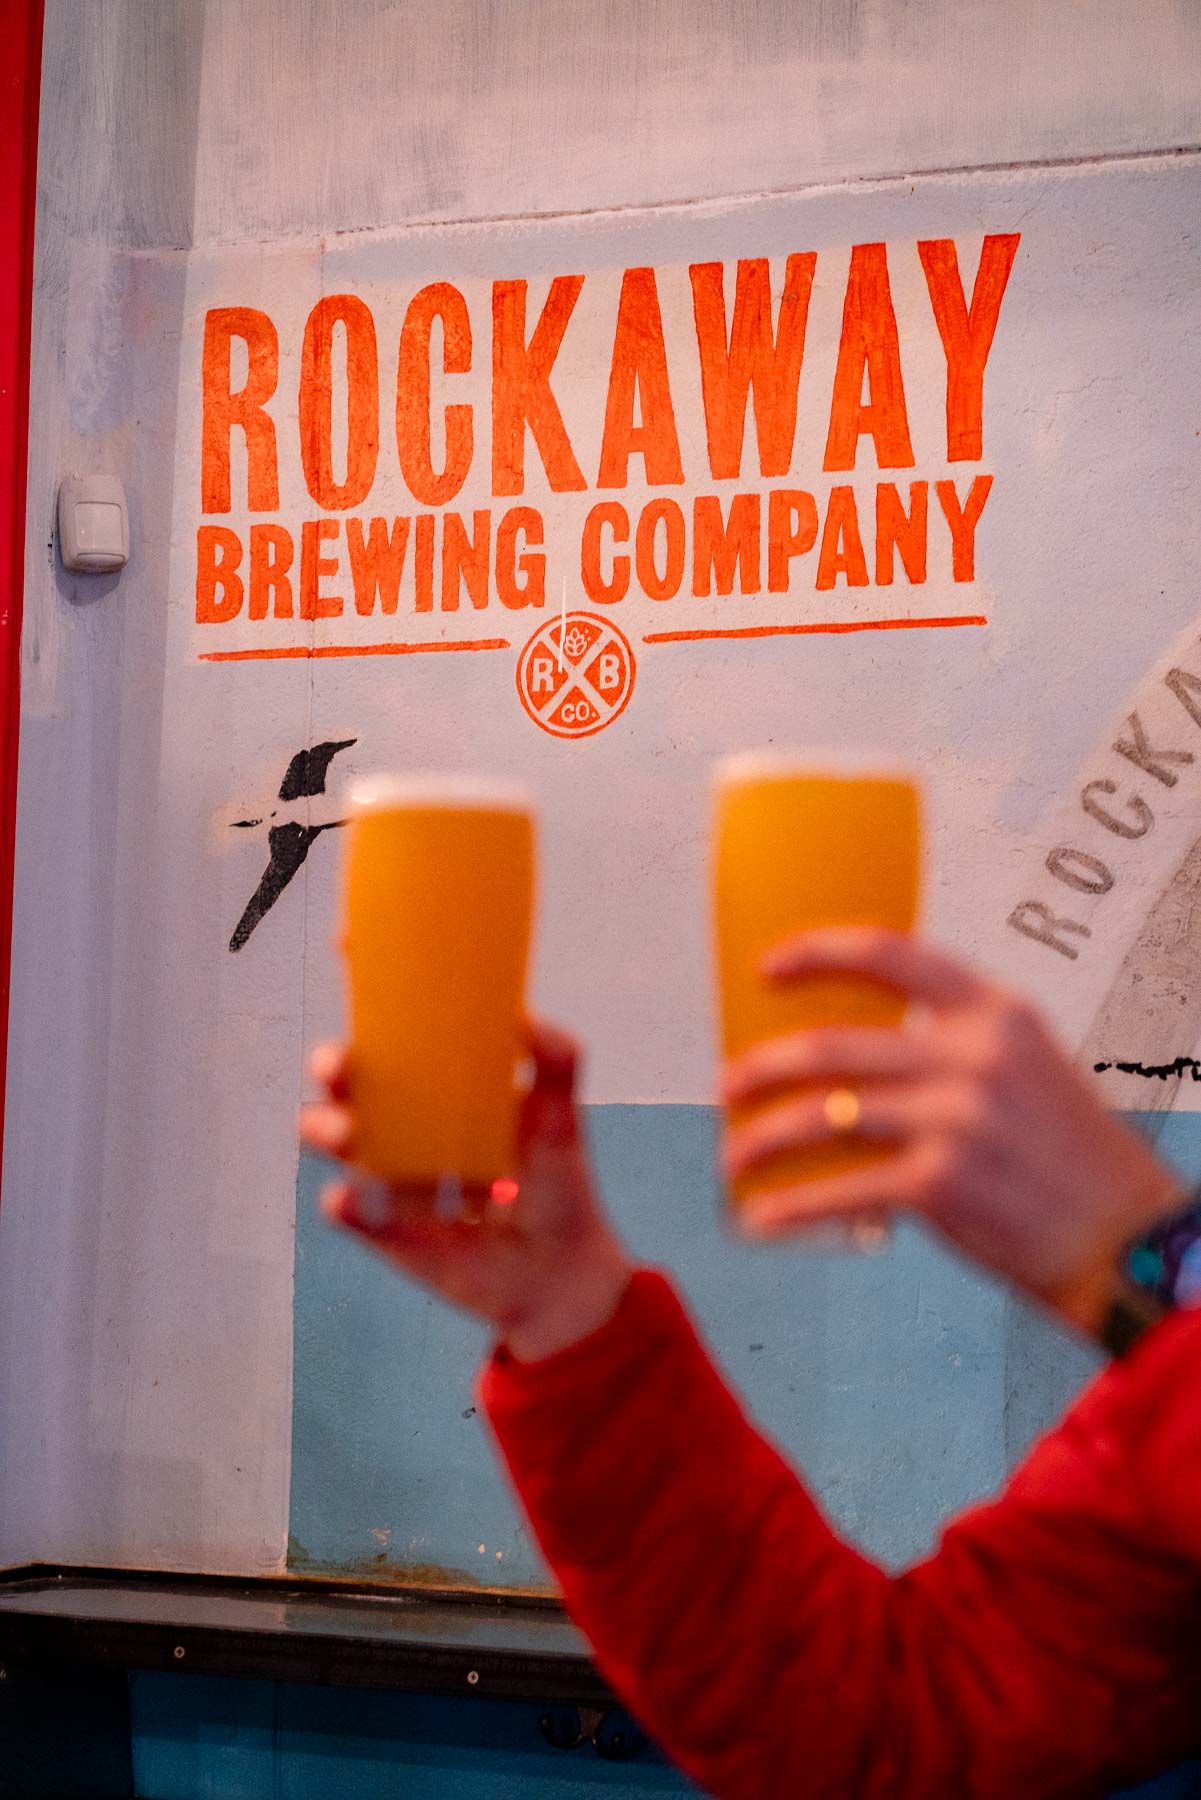 Rockaway Brewing
Best things to do Long Island City